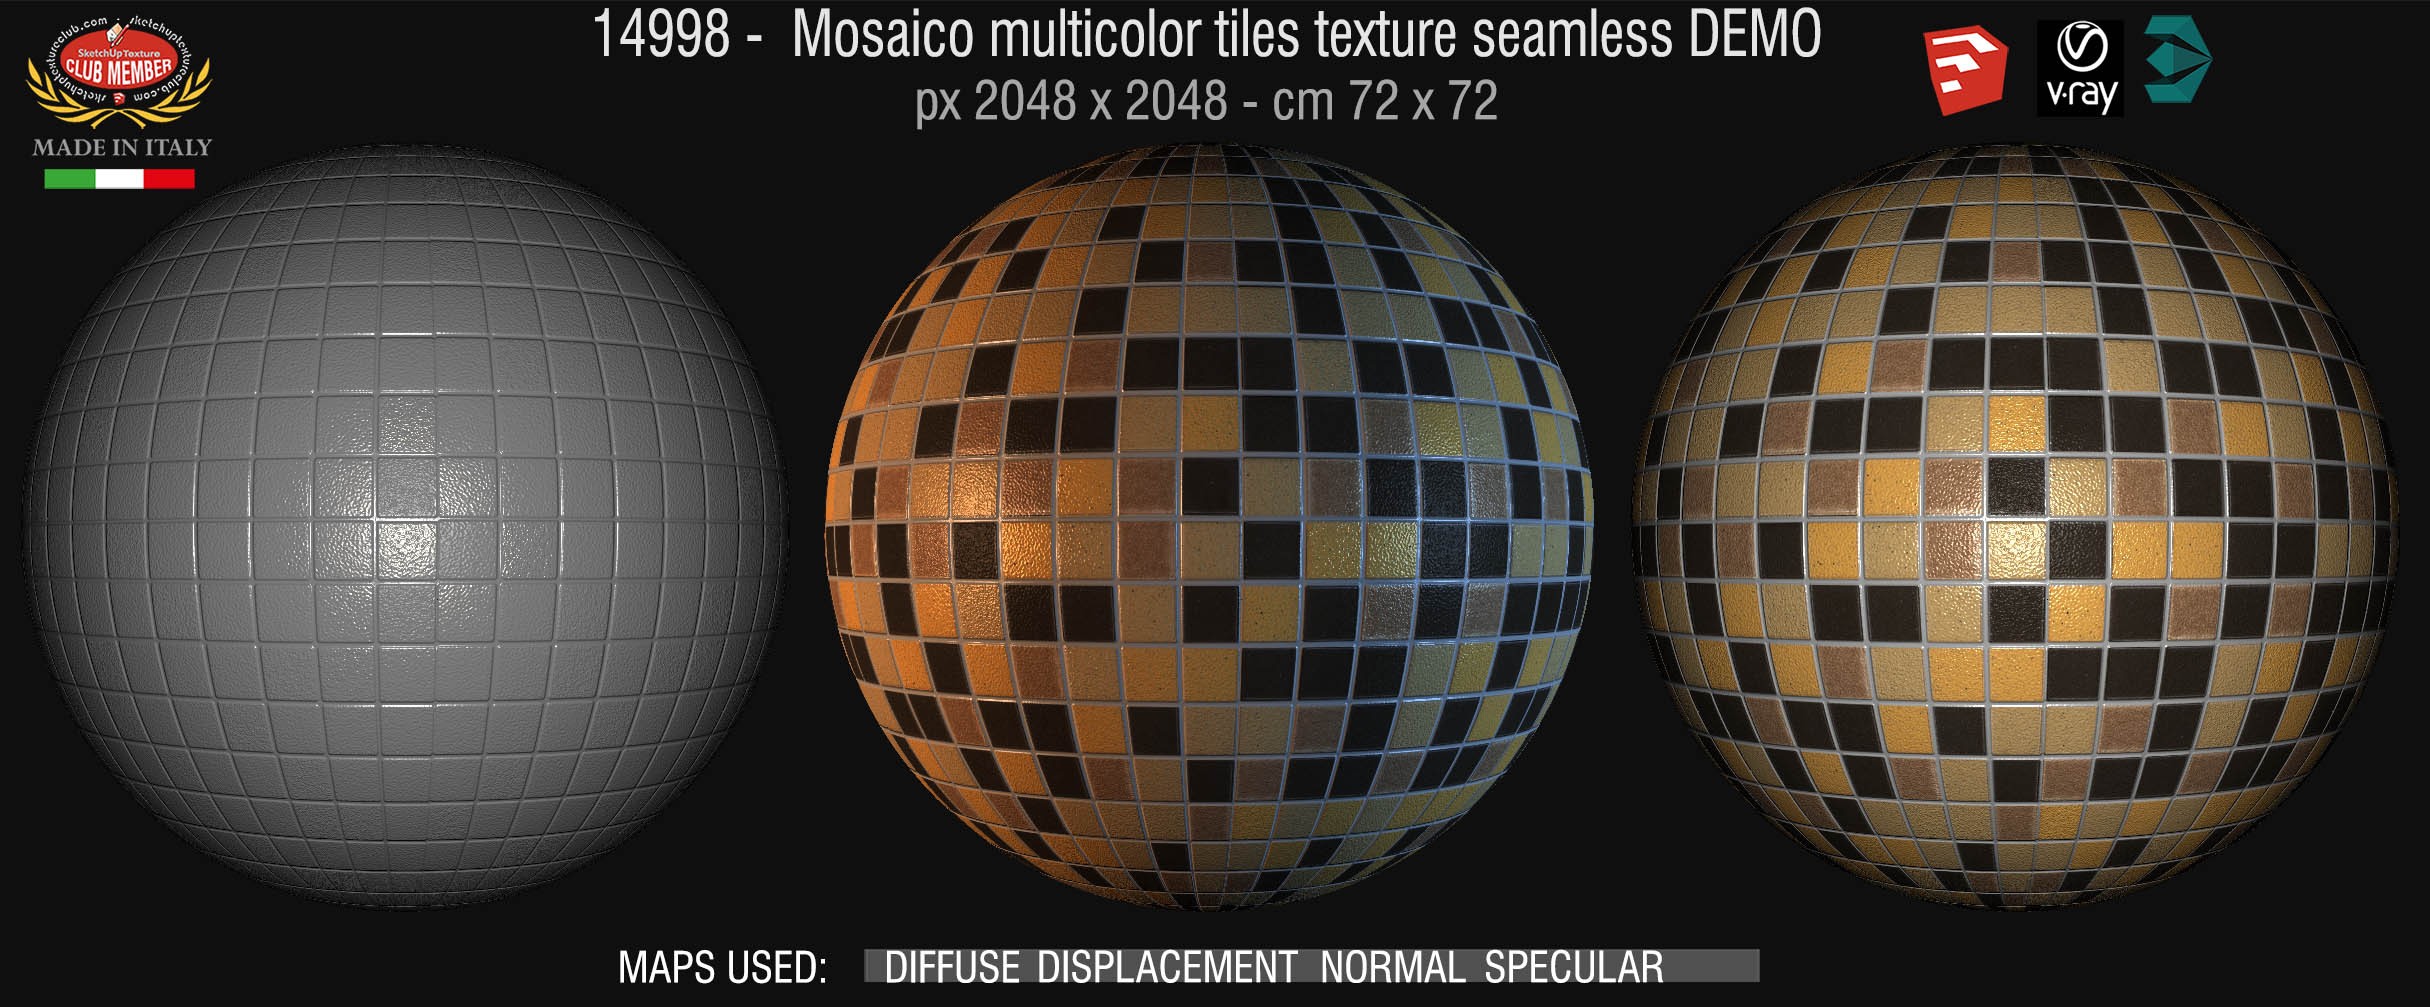 14998 Mosaico multicolor tiles texture seamless + maps DEMO